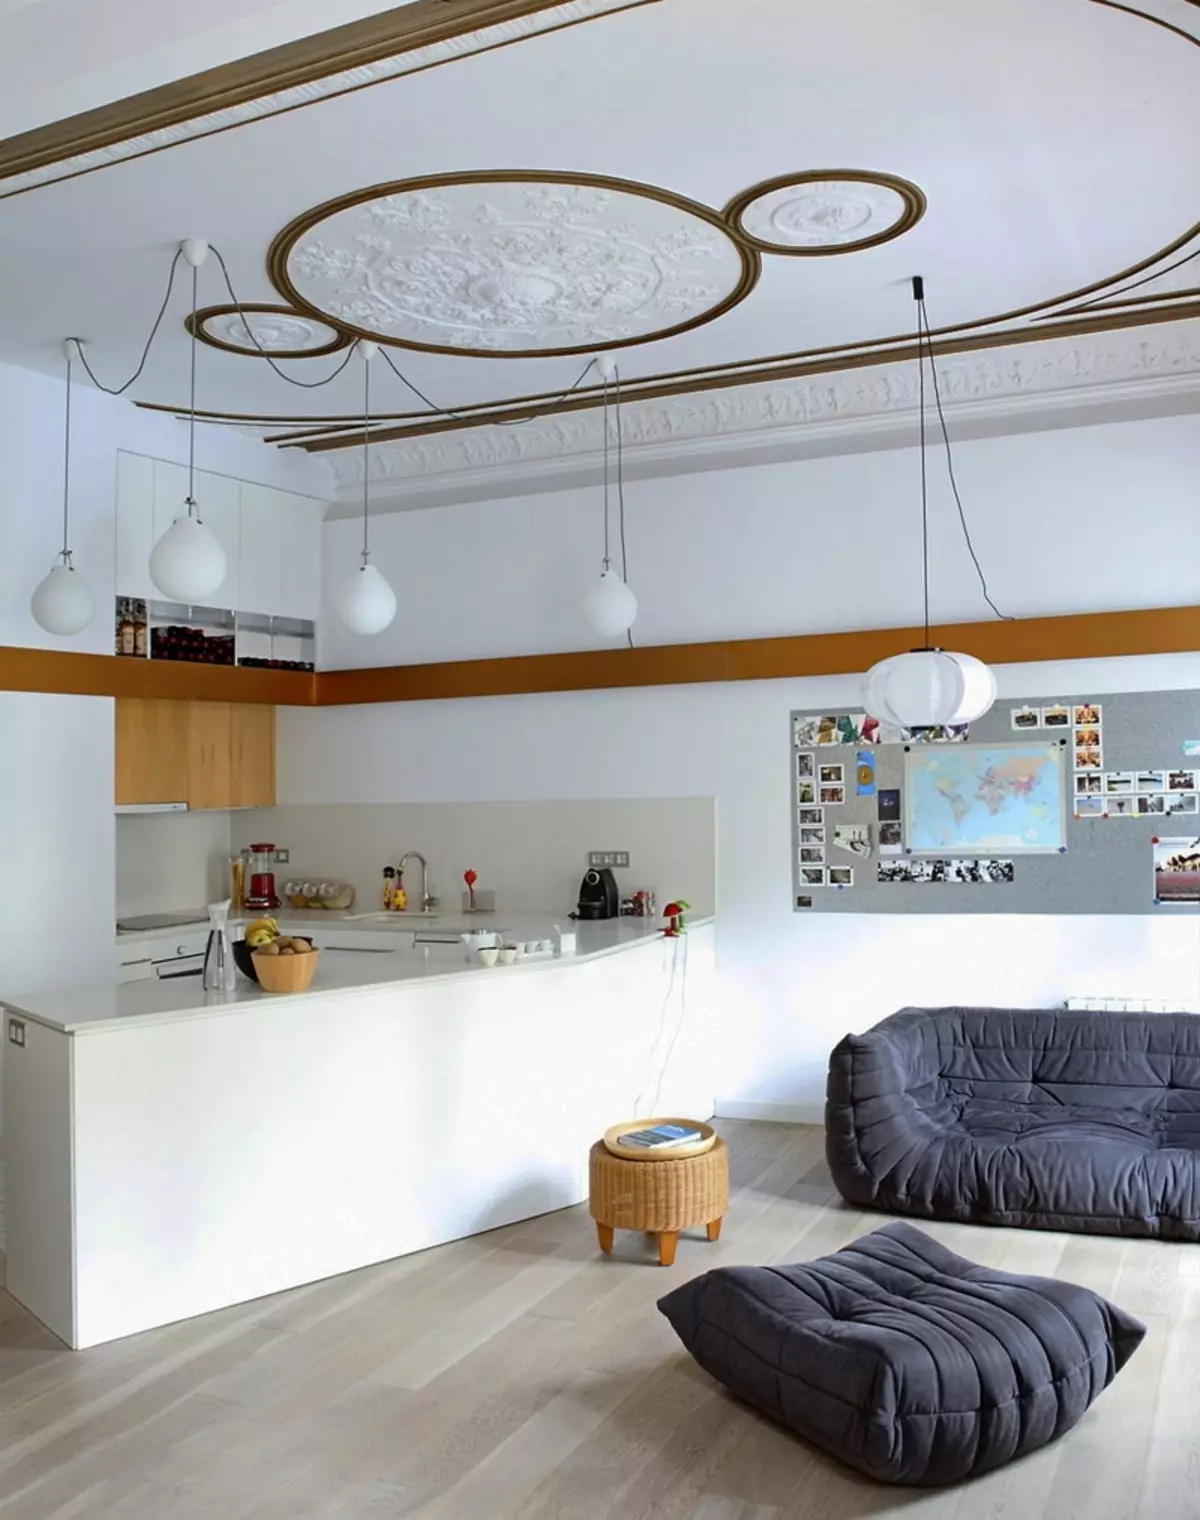 Reka bentuk ruang tamu dapur 20 meter persegi. M (75 foto): Contoh projek dengan zon, pilihan dalaman, nuansa merancang ruang tamu dapur gabungan dengan sofa 9508_4